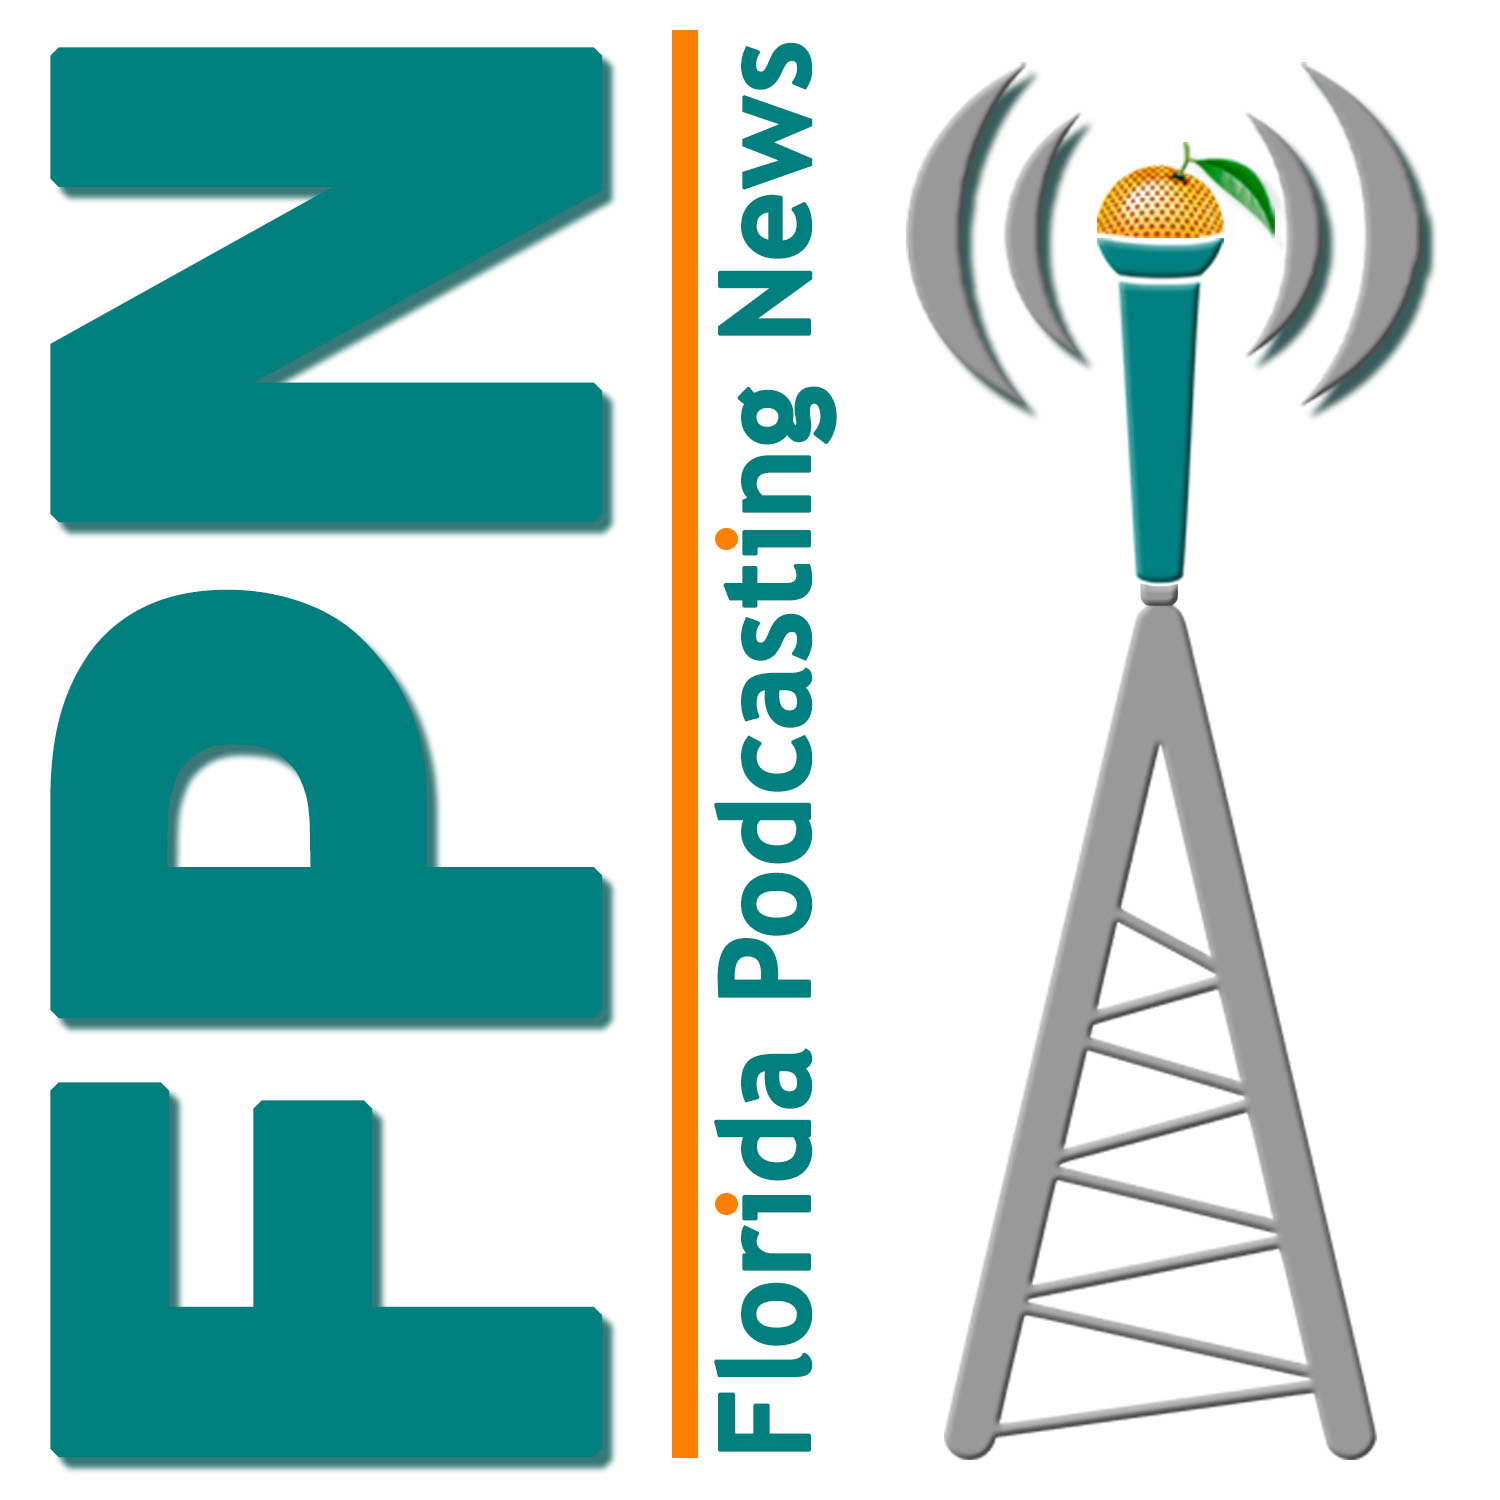 fpns-logo-square-201902